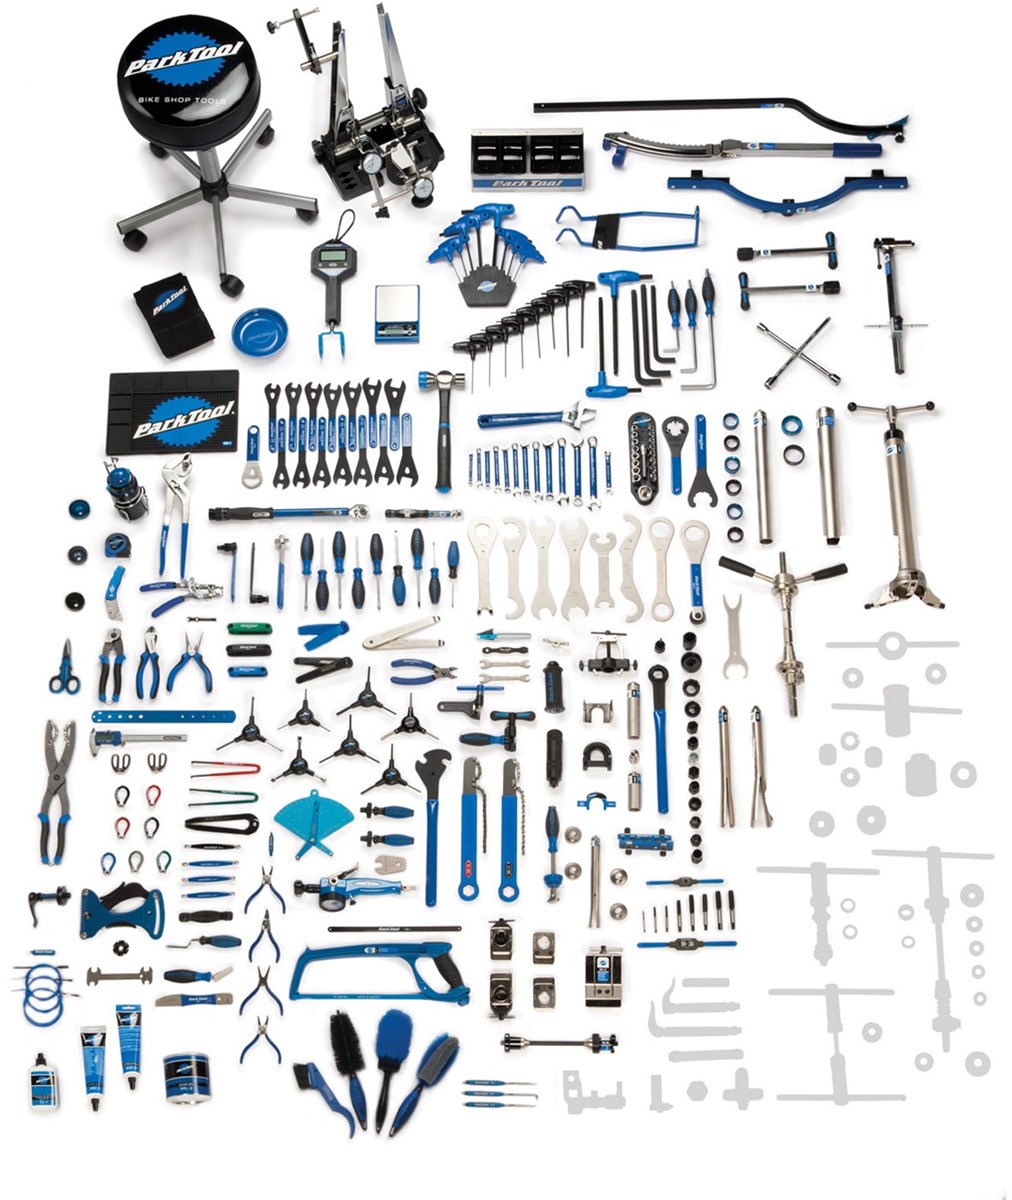 Park Tool BMK232 - Base Master Tool Kit product image